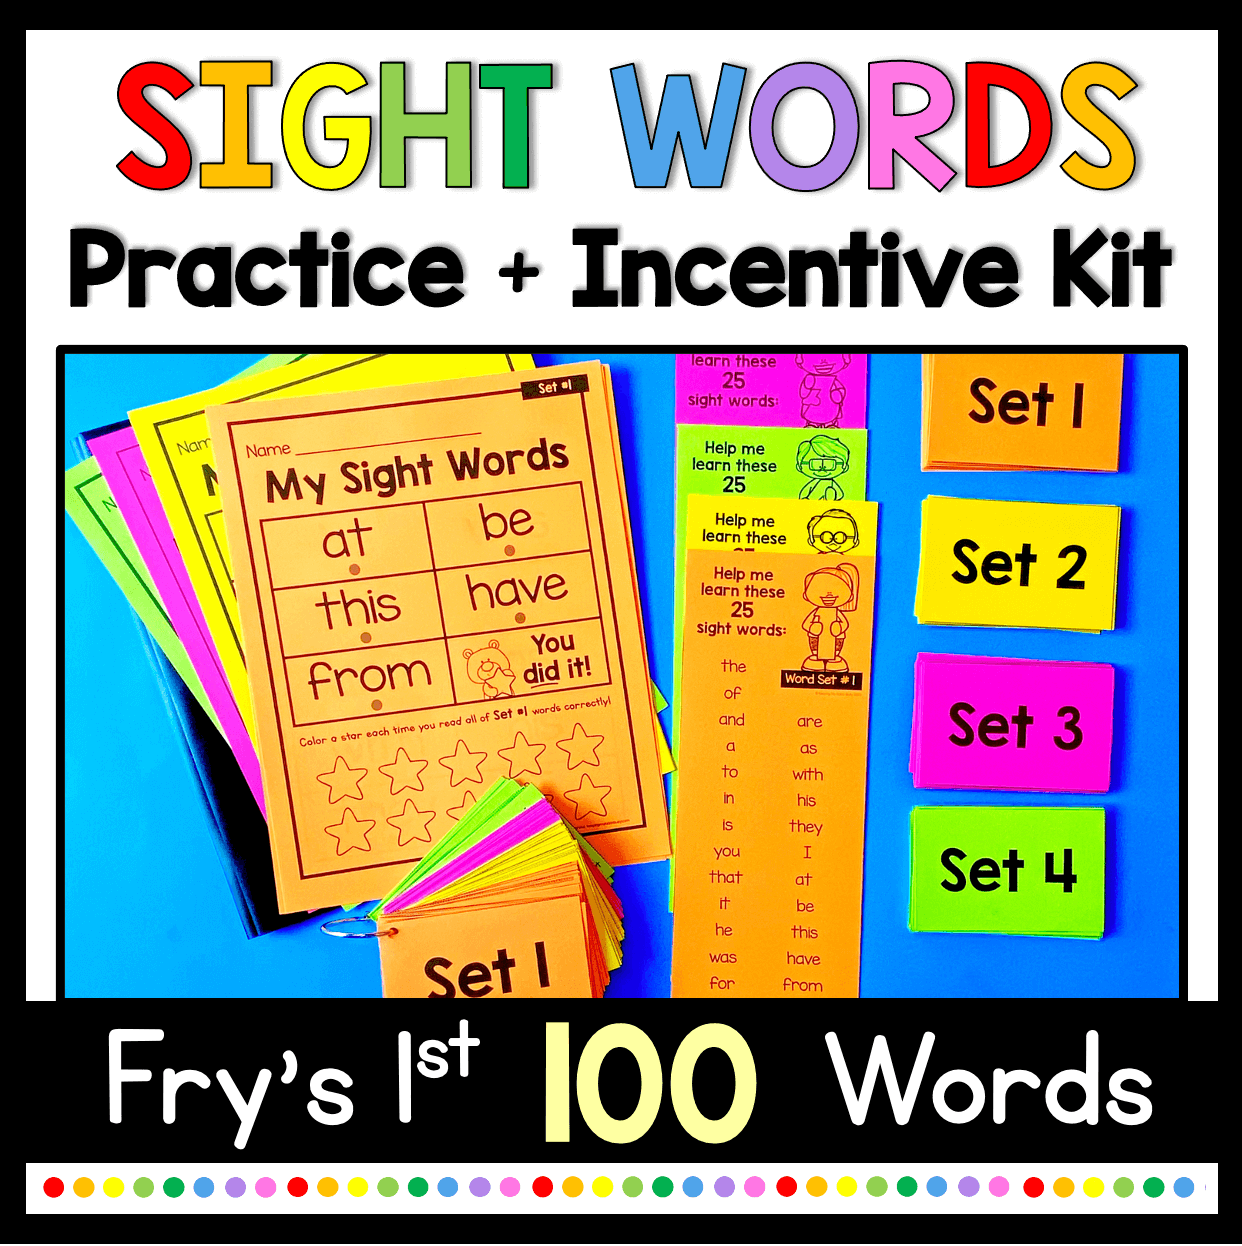 Practice + Incentive Kit